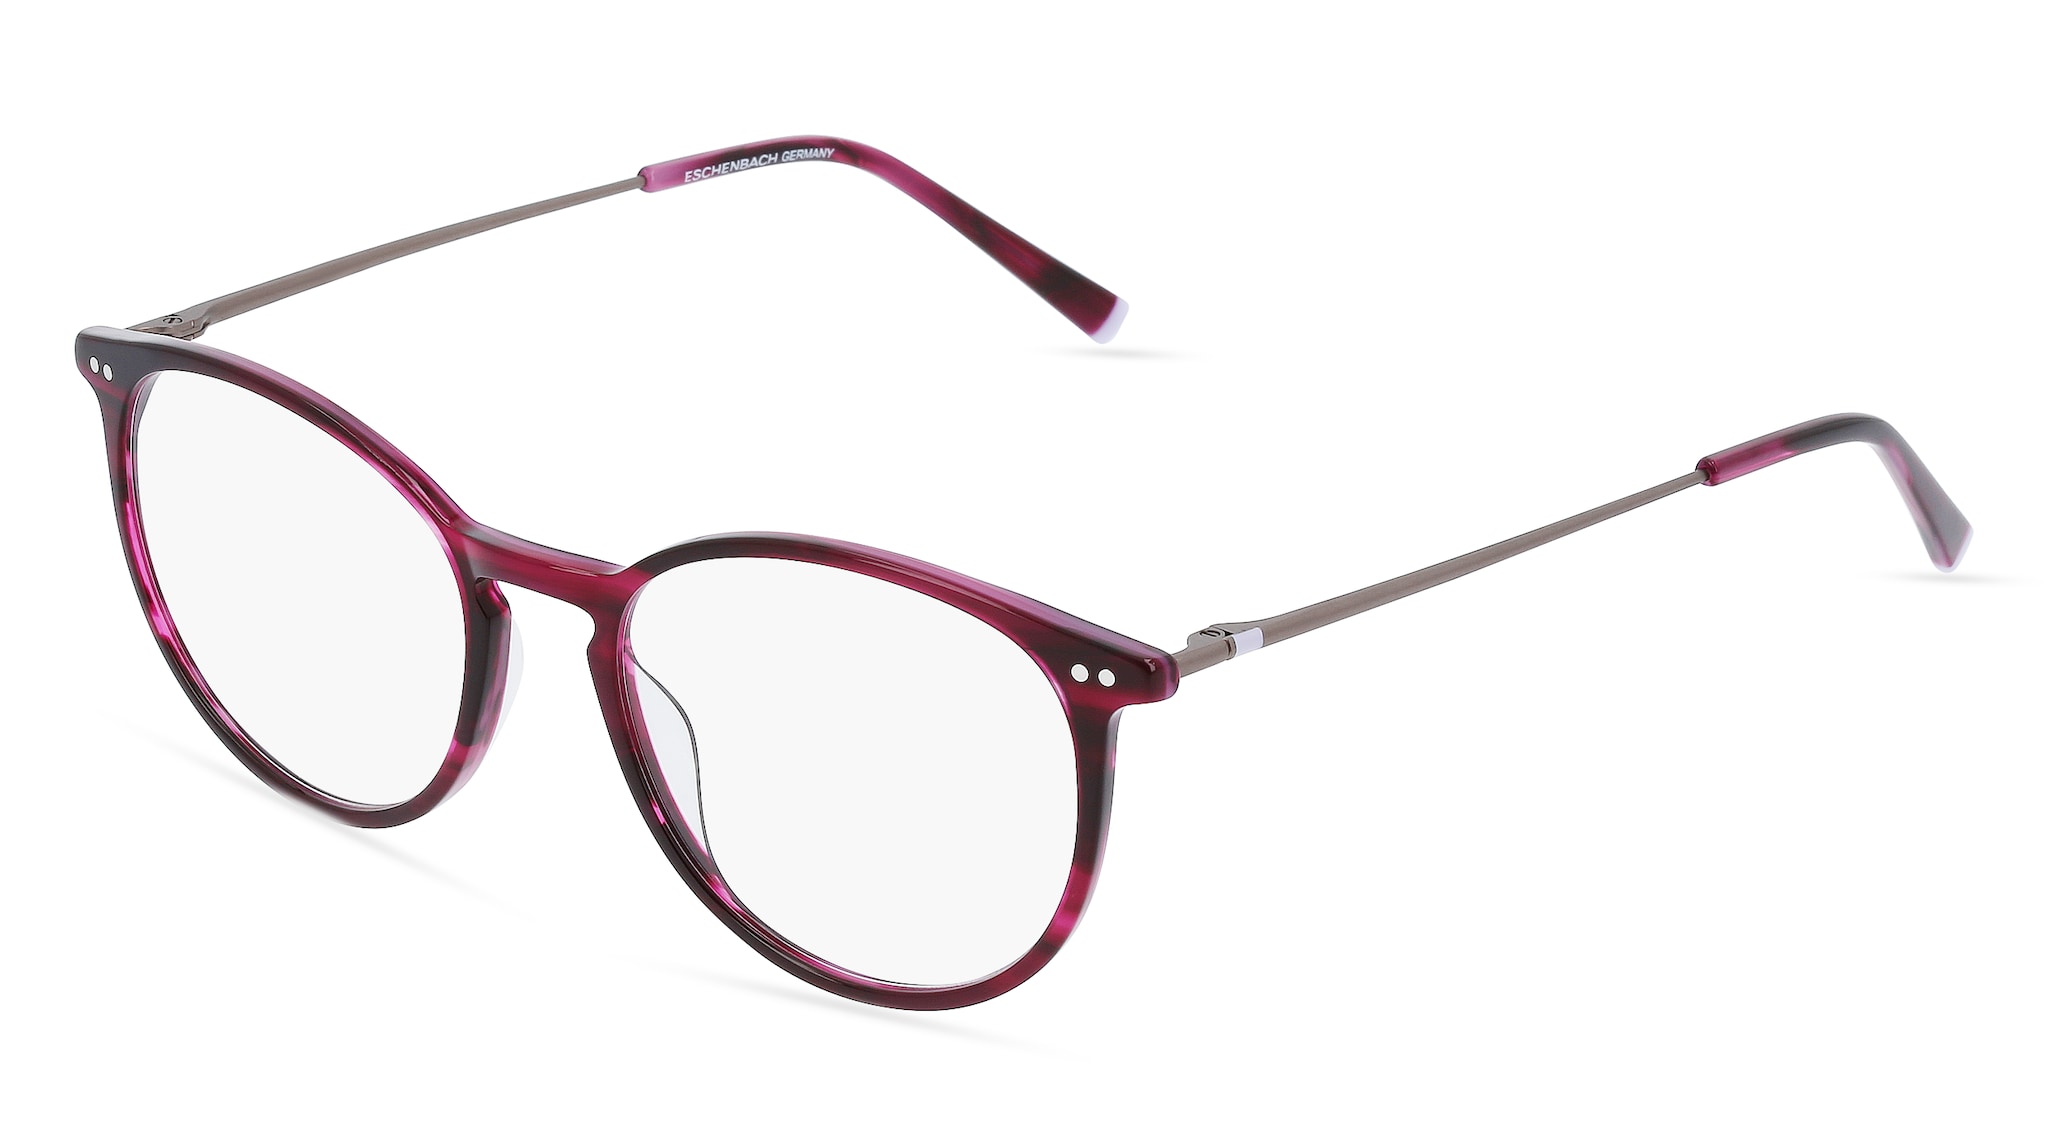 Eyewear by David Beckham, Glasses & Sunglasses Collection